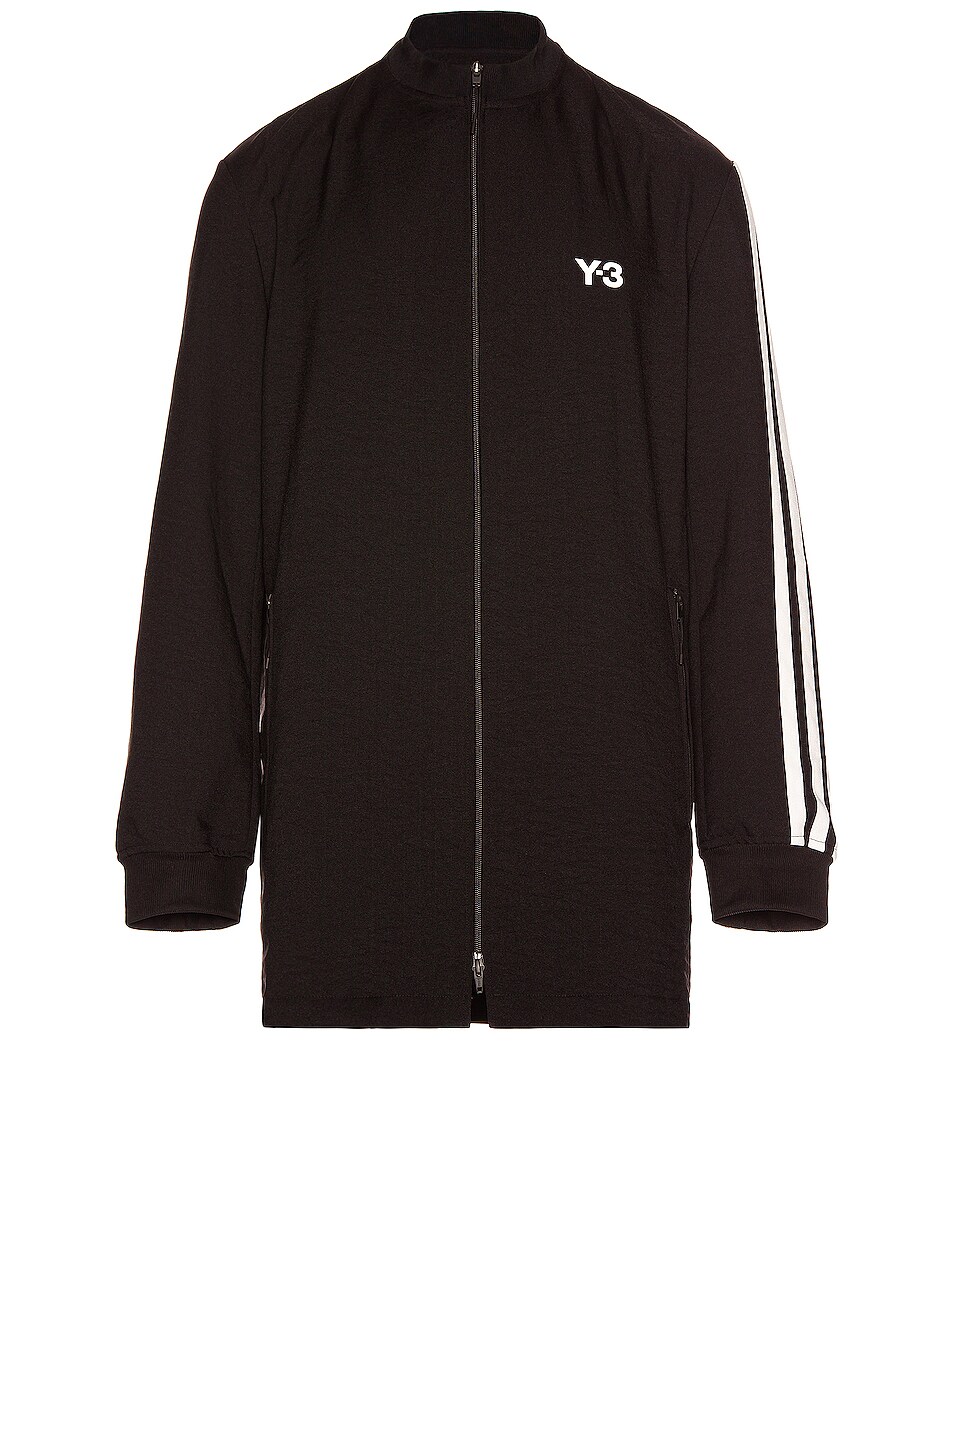 Image 1 of Y-3 Yohji Yamamoto CH1 Track Top in Black